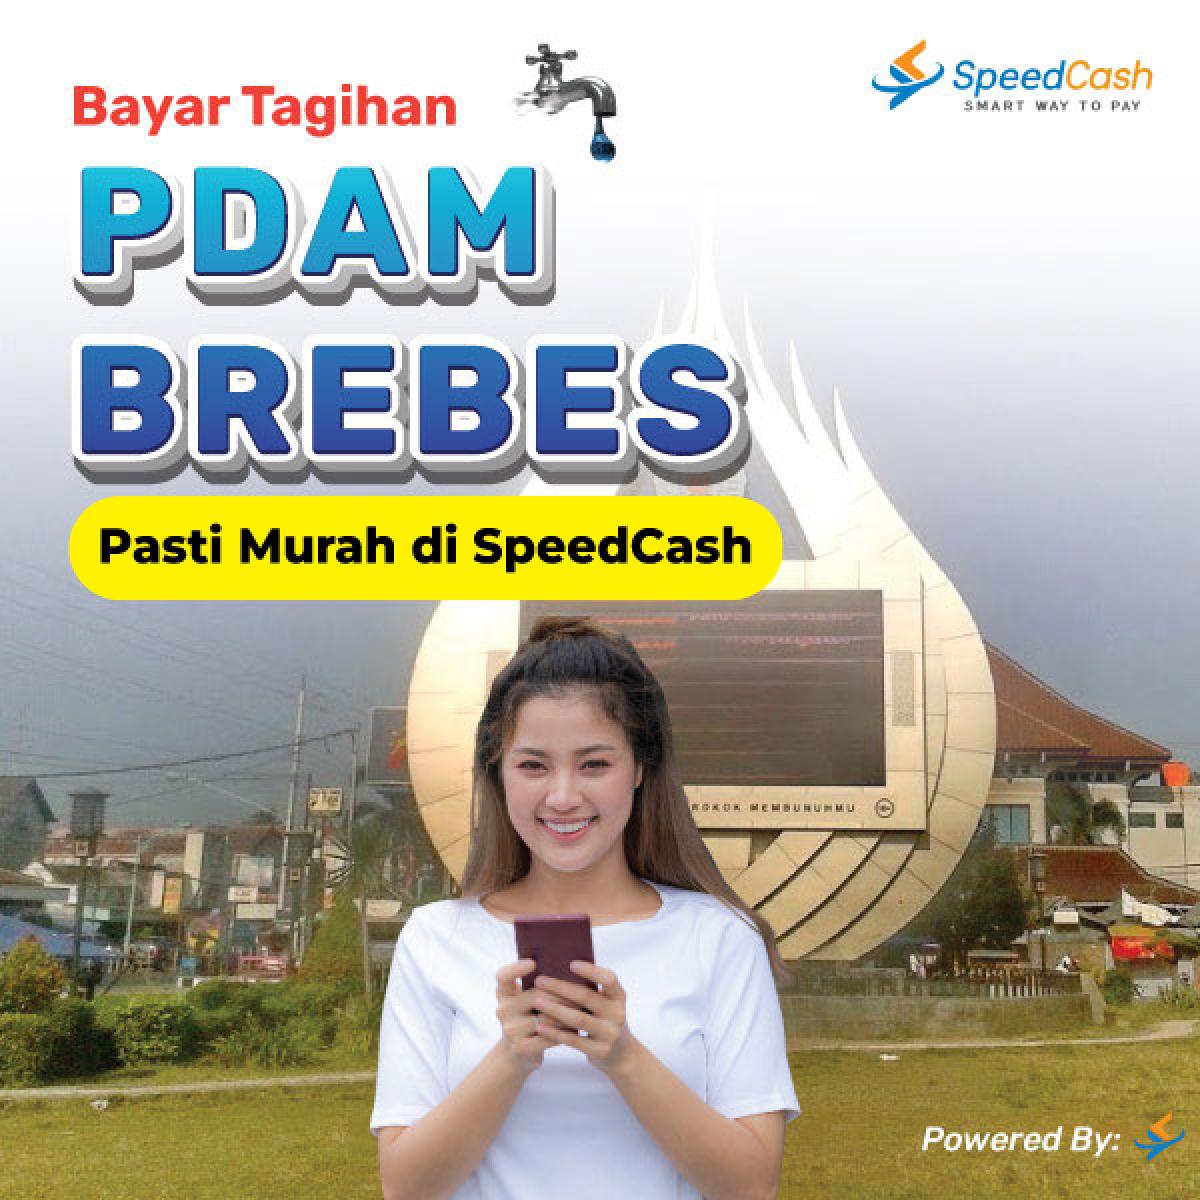 cek tagihan pdam Brebes dan bayar bisa melalui online - SpeedCash